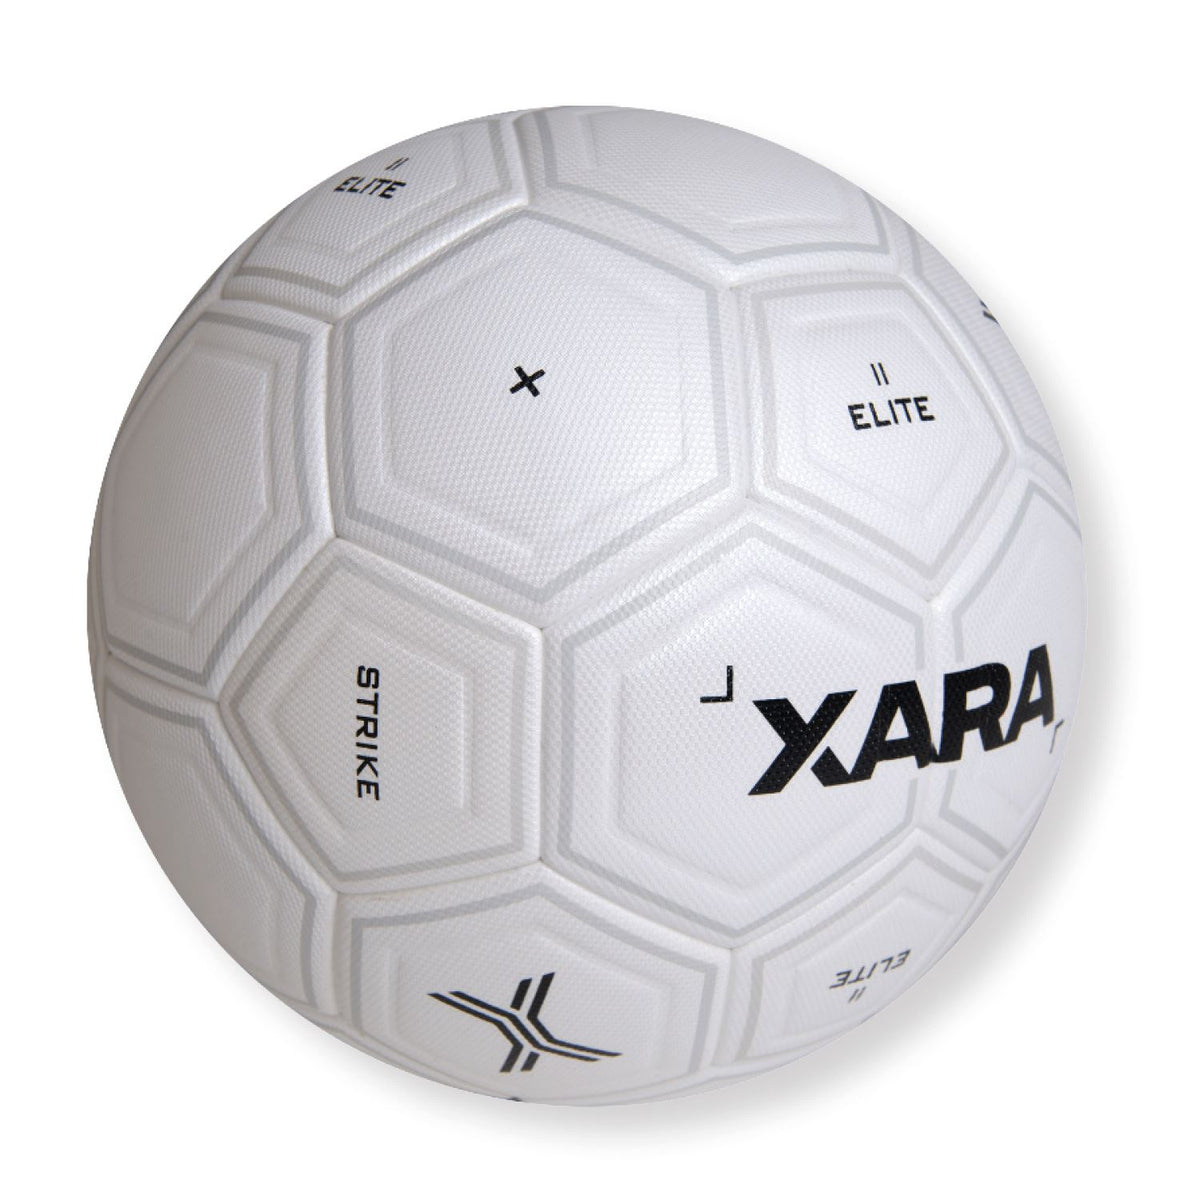 Elite Ball Balls Xara Soccer White/Grey/Black Size 4 